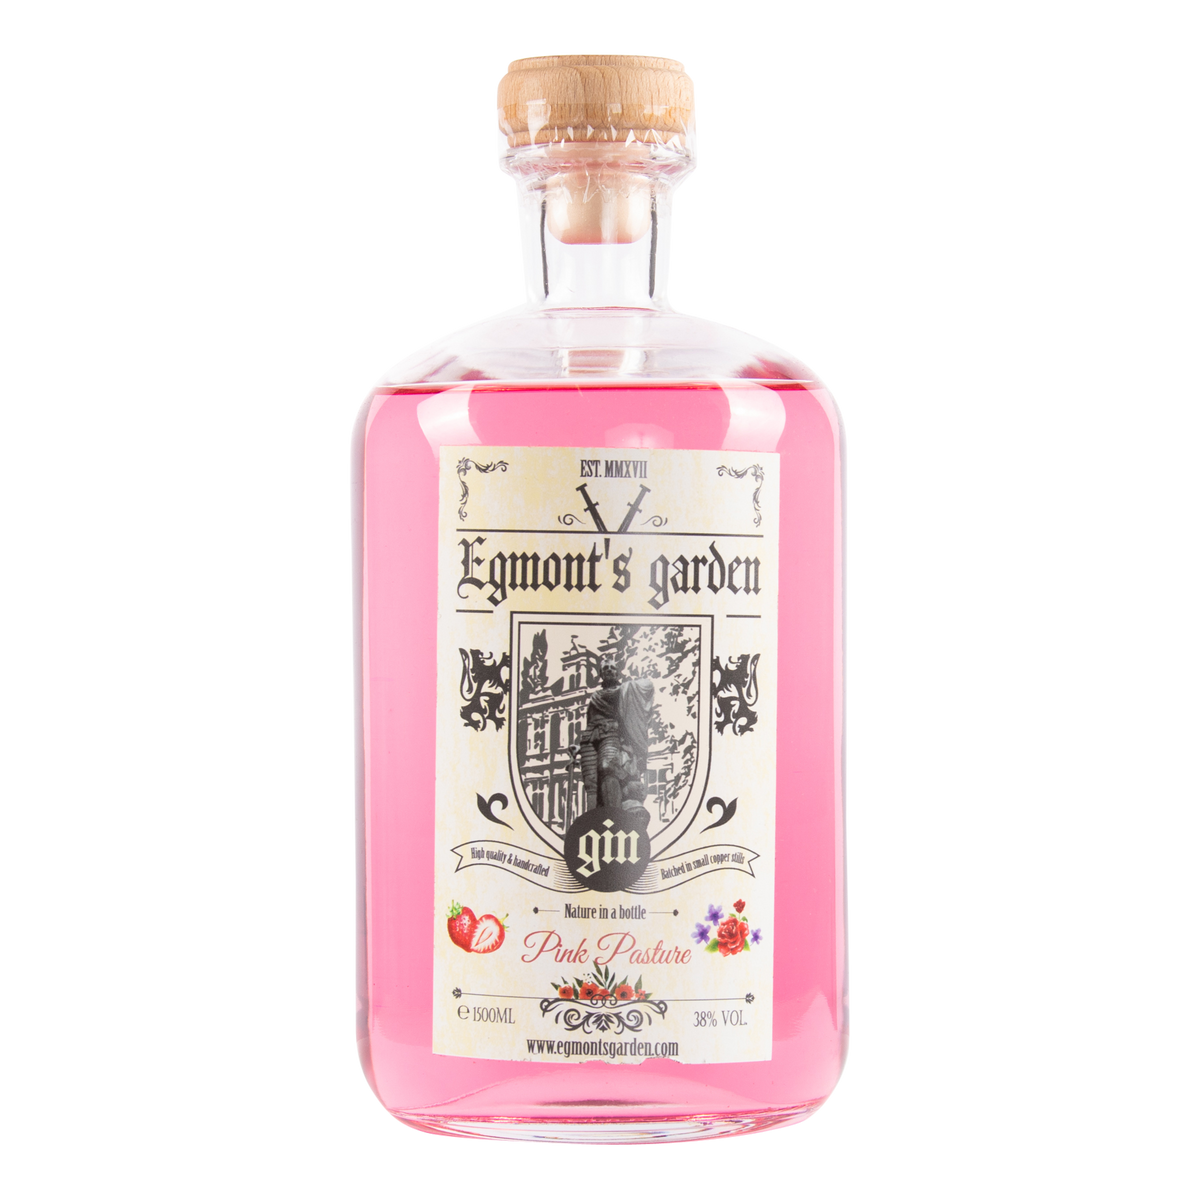 Egmonts garden gin Pink Pasture gin big groot 1500ml